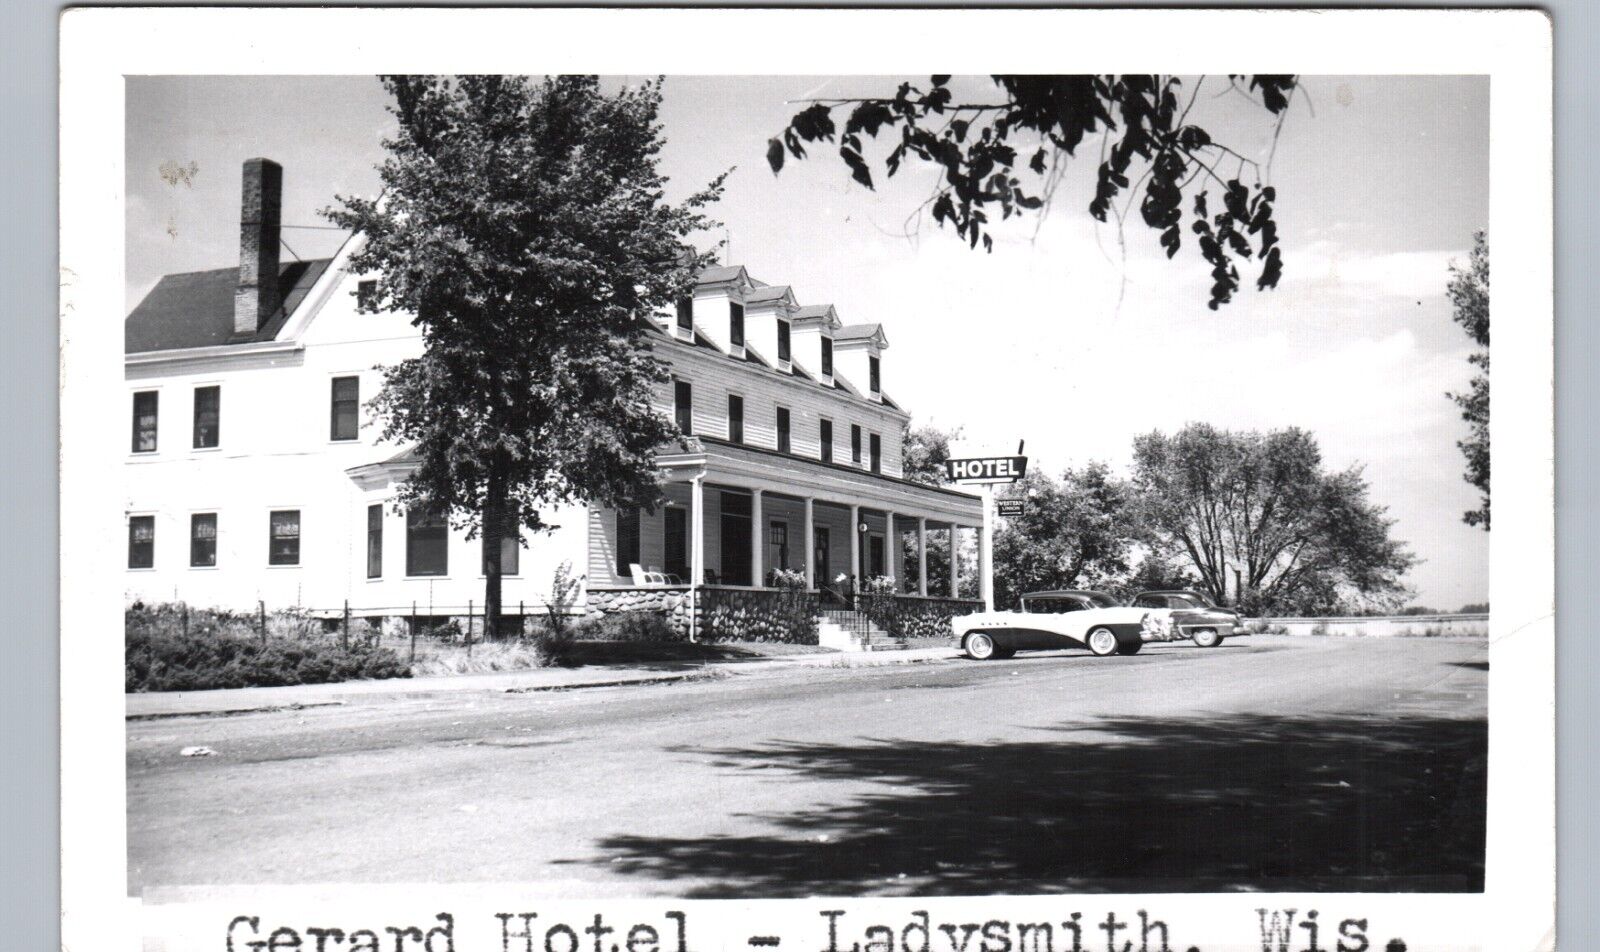 GERARD HOTEL ladysmith wi real photo postcard rppc wisconsin history